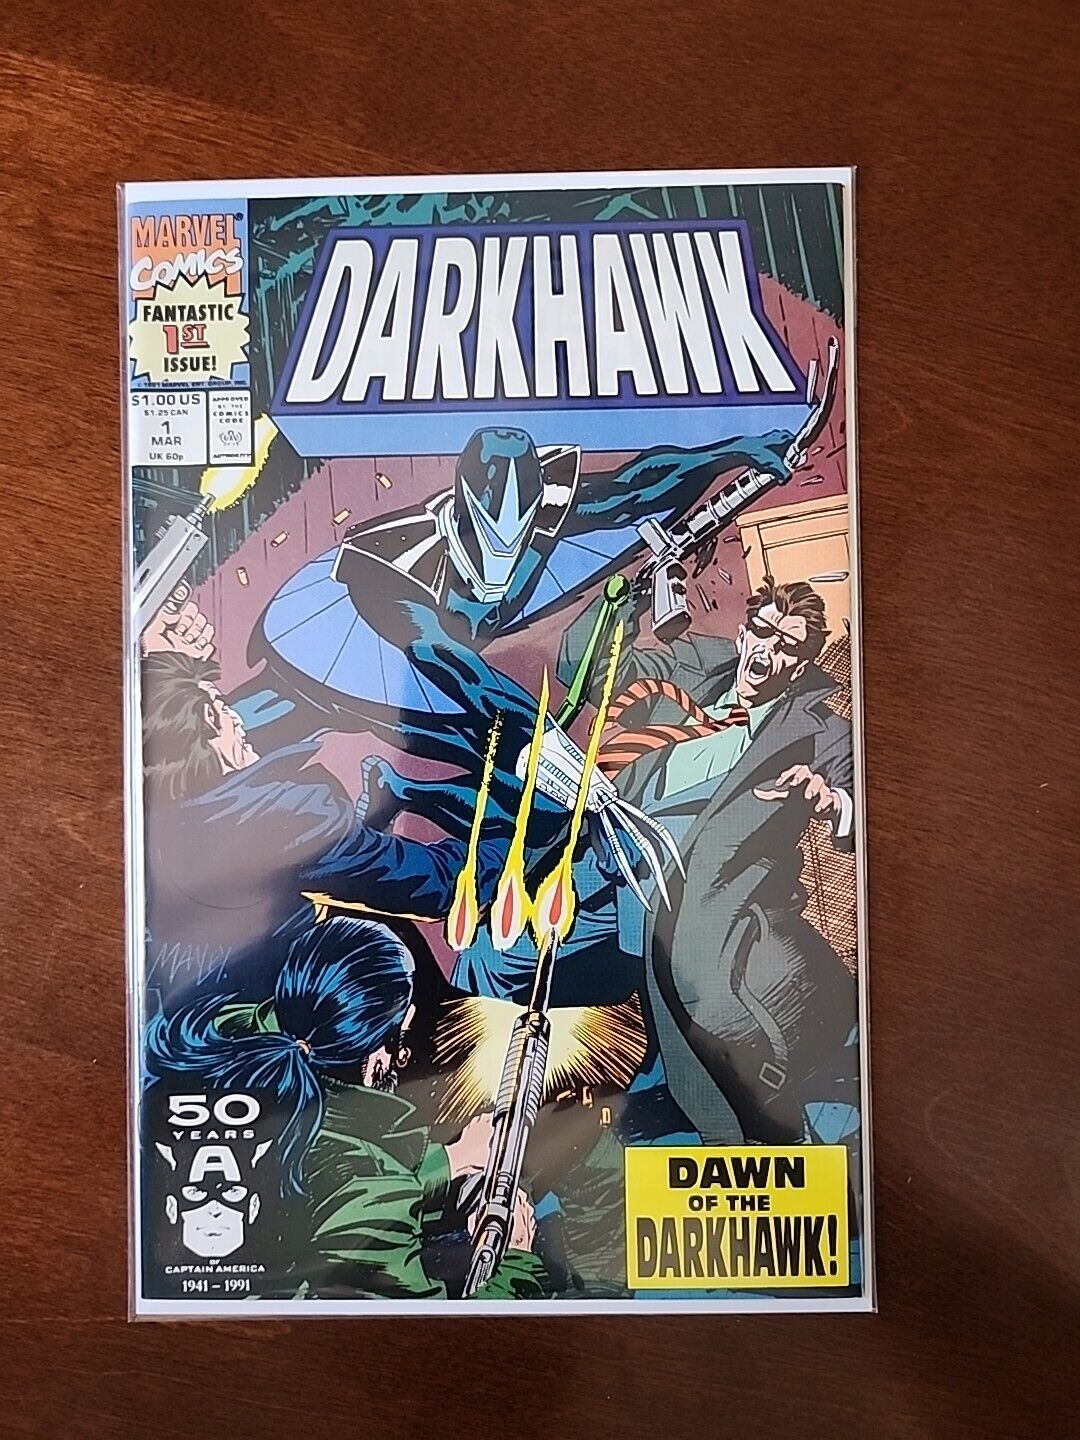 Darkhawk #1 (Marvel Comics March 1991)